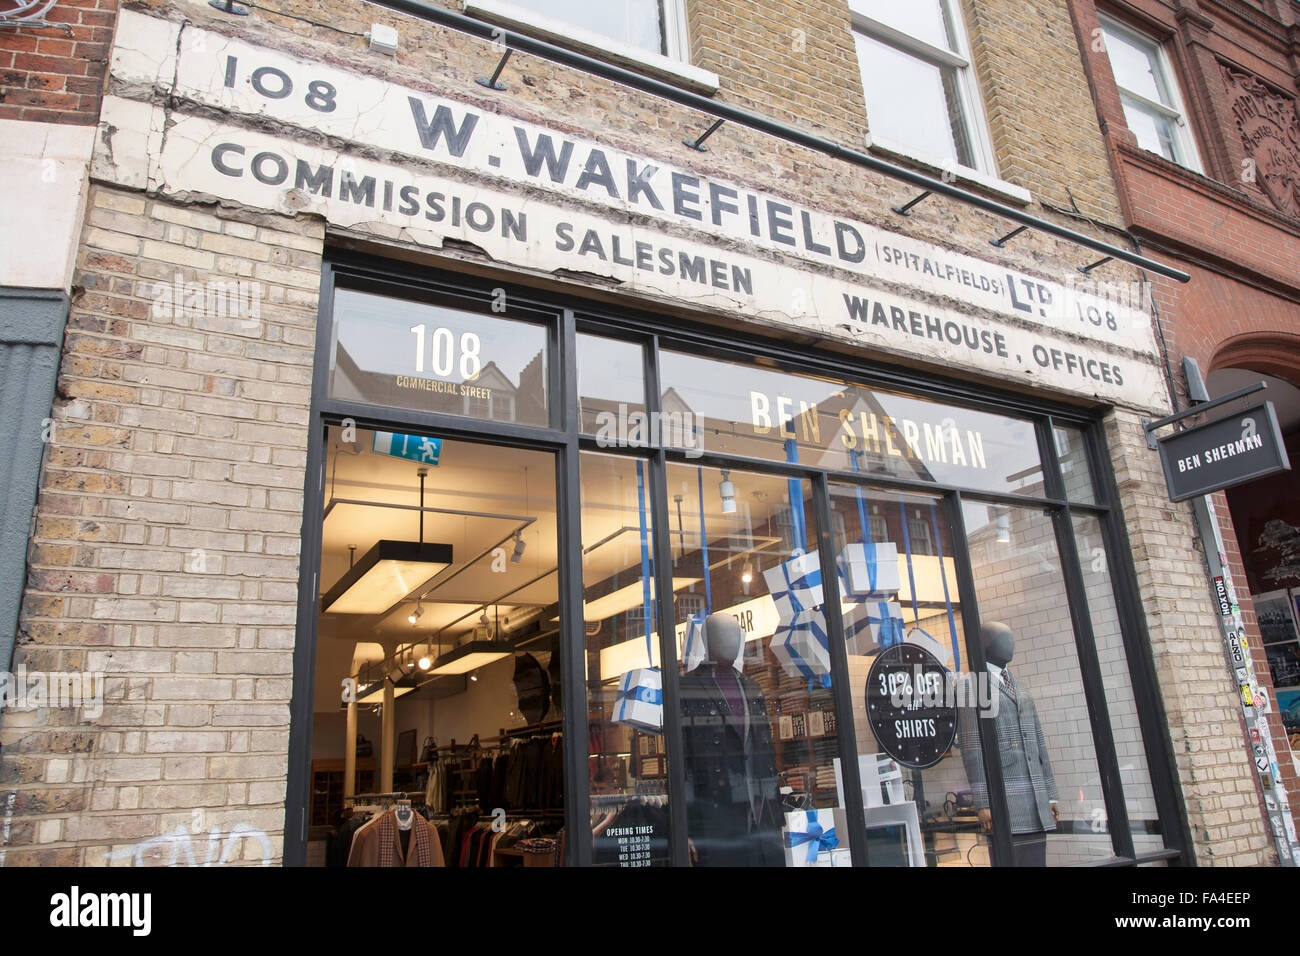 Wakefield Ben Sherman Clothes Shop Spitalfields London Stock Photo Alamy